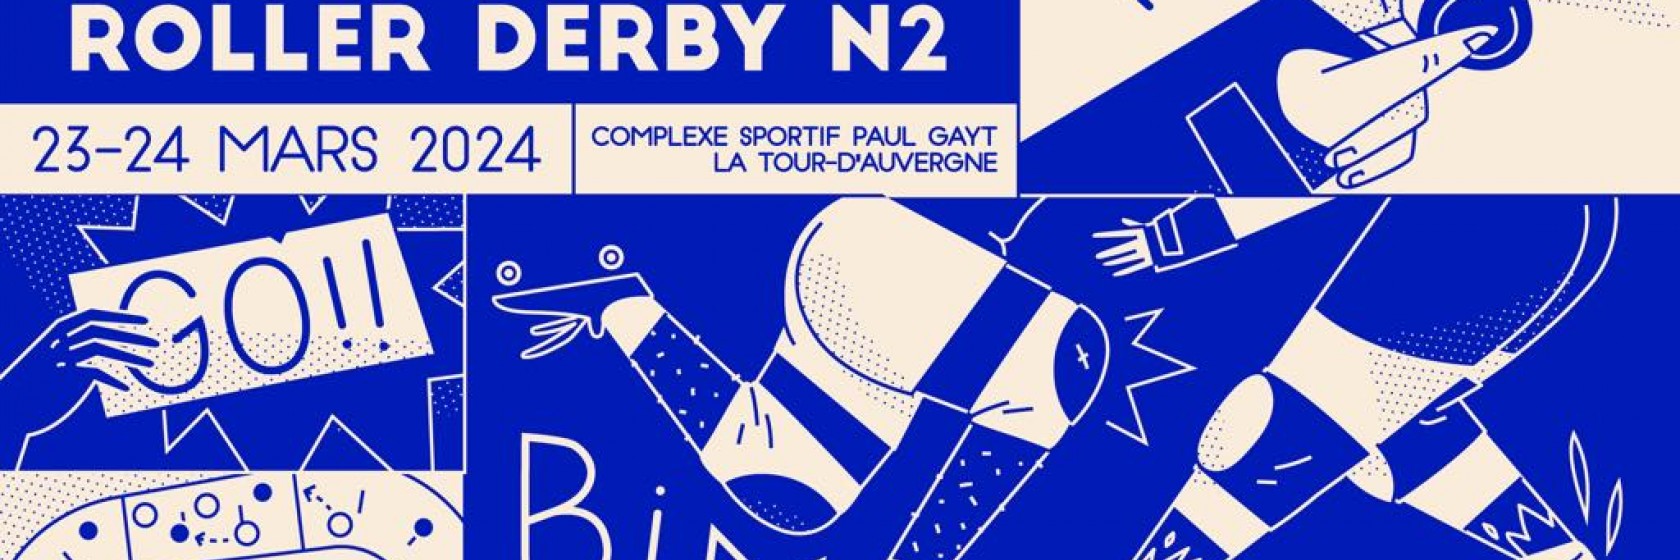 Nationale 2 Zone 7 Roller derby championnat France Clermont Ferrand